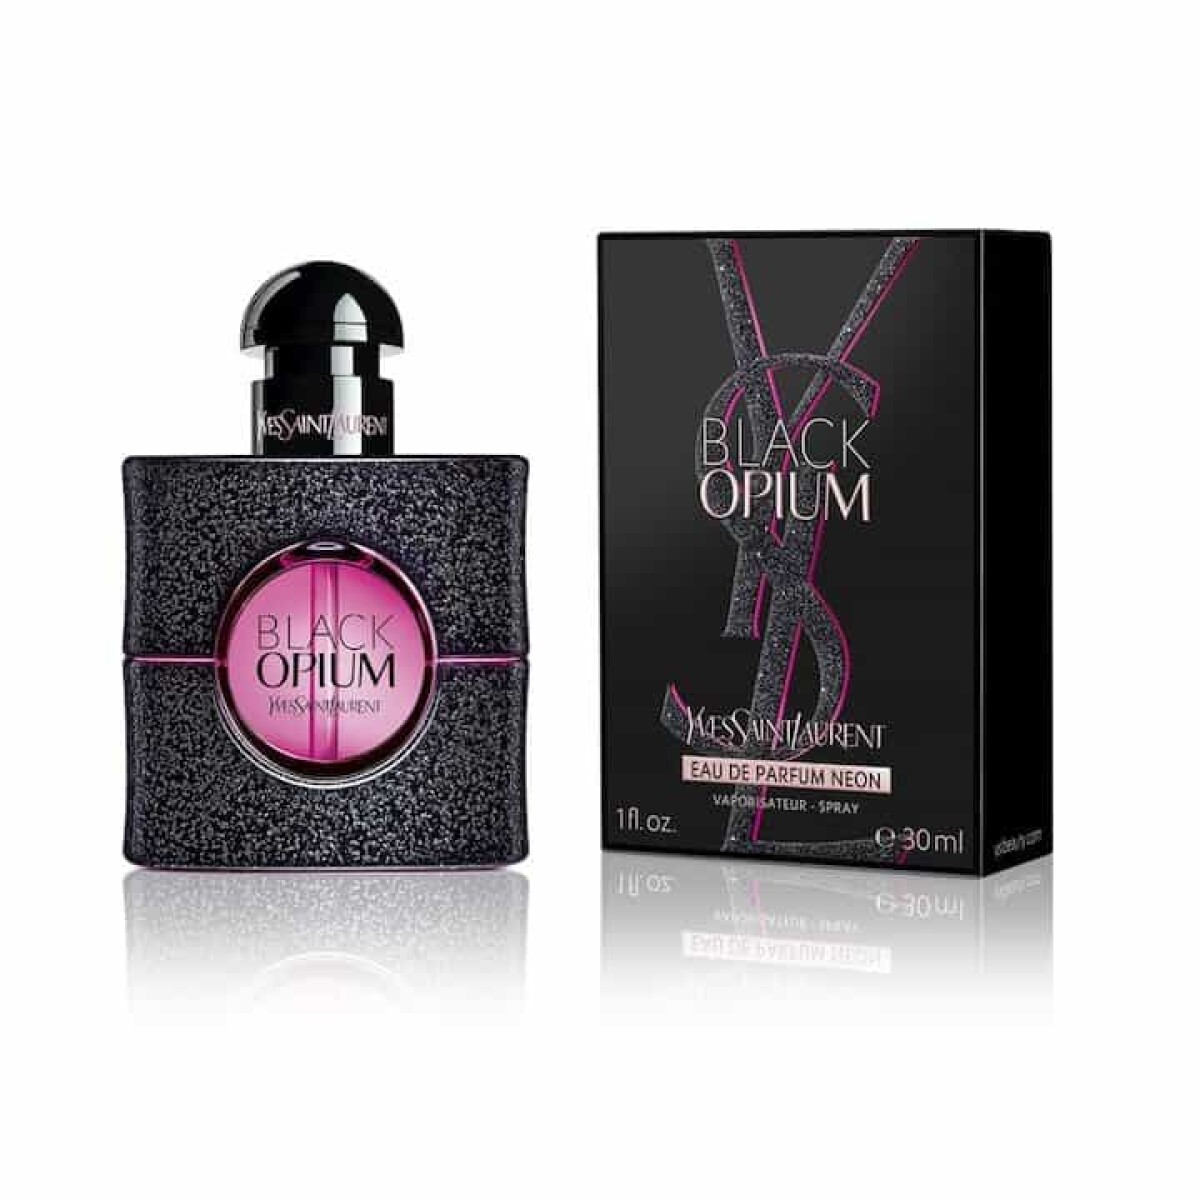 Perfume Ysl Black Opium Neon Edp 30 ml 